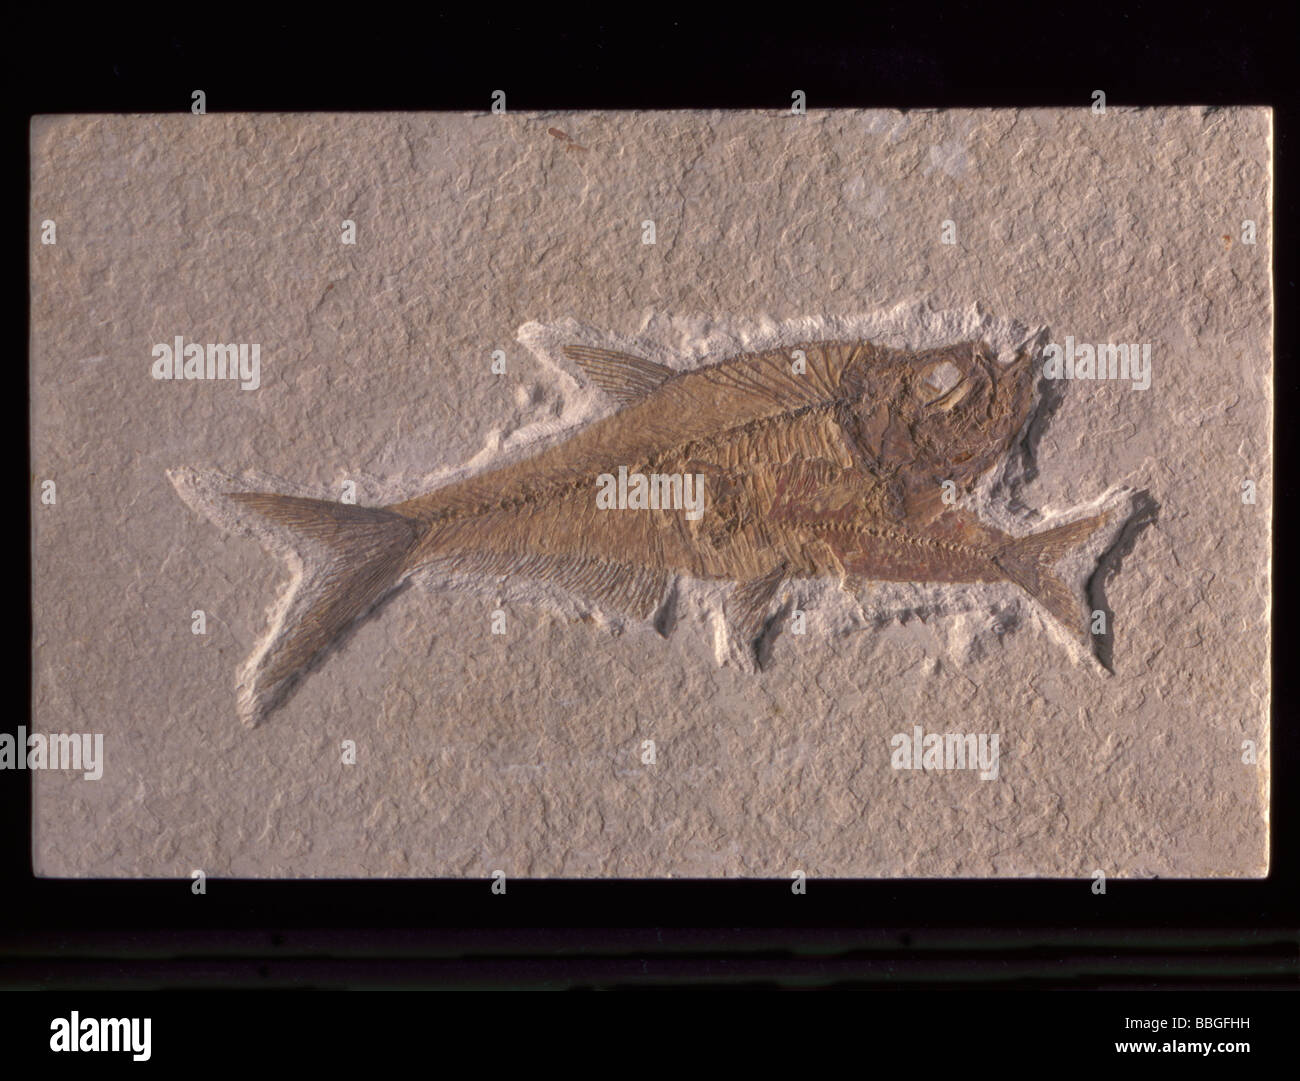 Fossil fish (Diplomystus humilis), from Eocene period, Wyoming, USA., North America. Length 160mm. Stock Photo